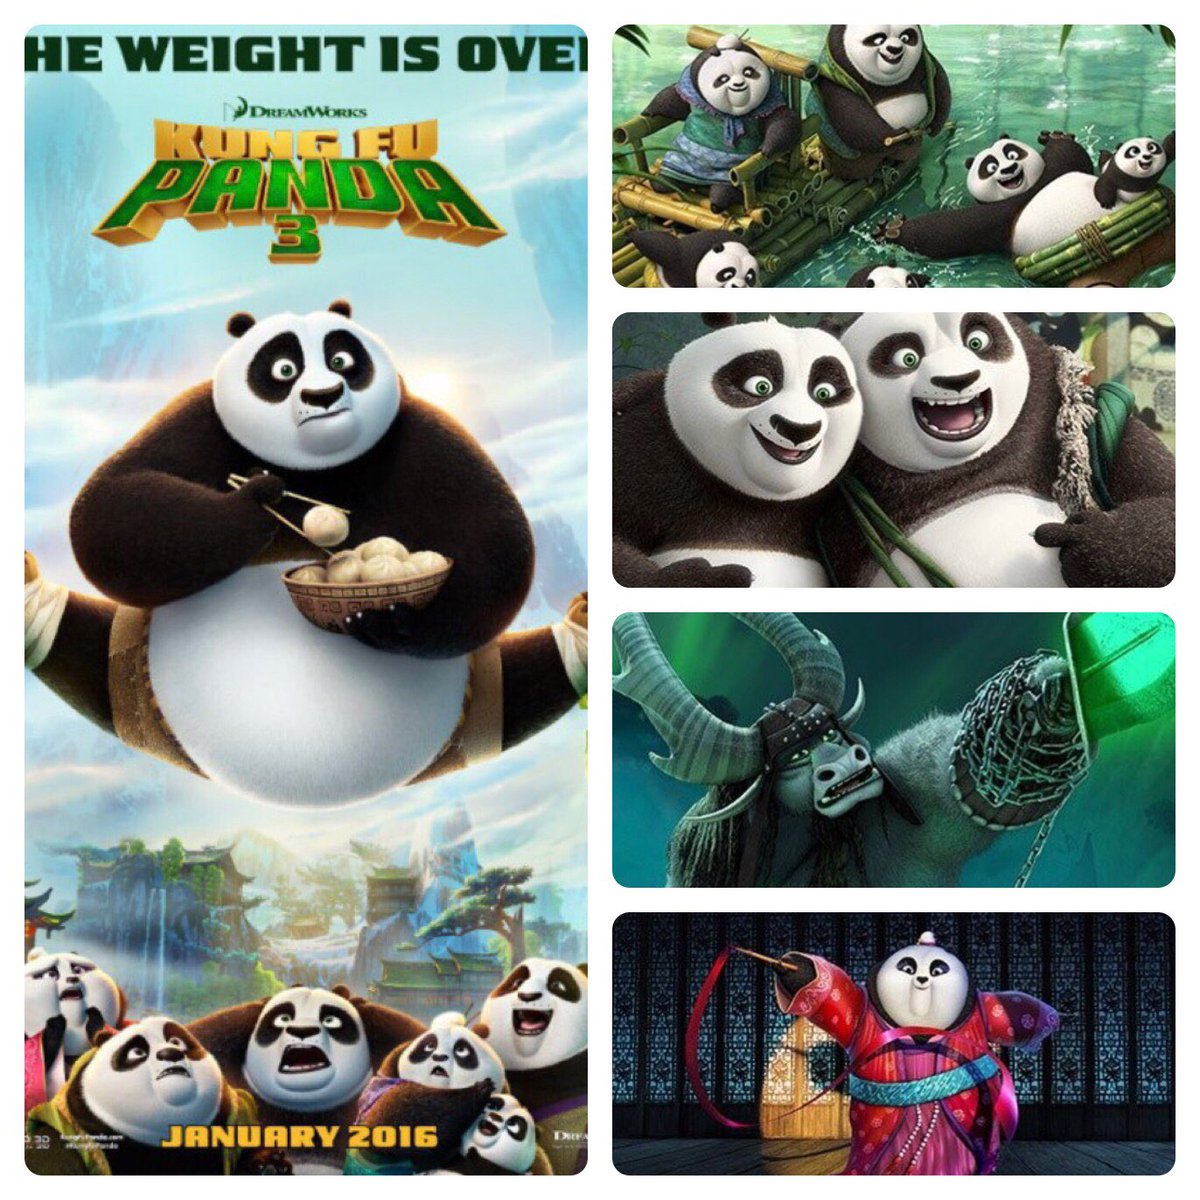 Kung Fu Panda 3 celebrates it's 7th anniversary today.
#kungfupanda3 #masterpo #mastershifu #grandmasteroogway #furiousfive #mastertigress #masterviper #mastermoney #mastermantis #mastercrane #lishan #mrping #generalkai #meimei #dreamworksanimation #orientaldreamworks